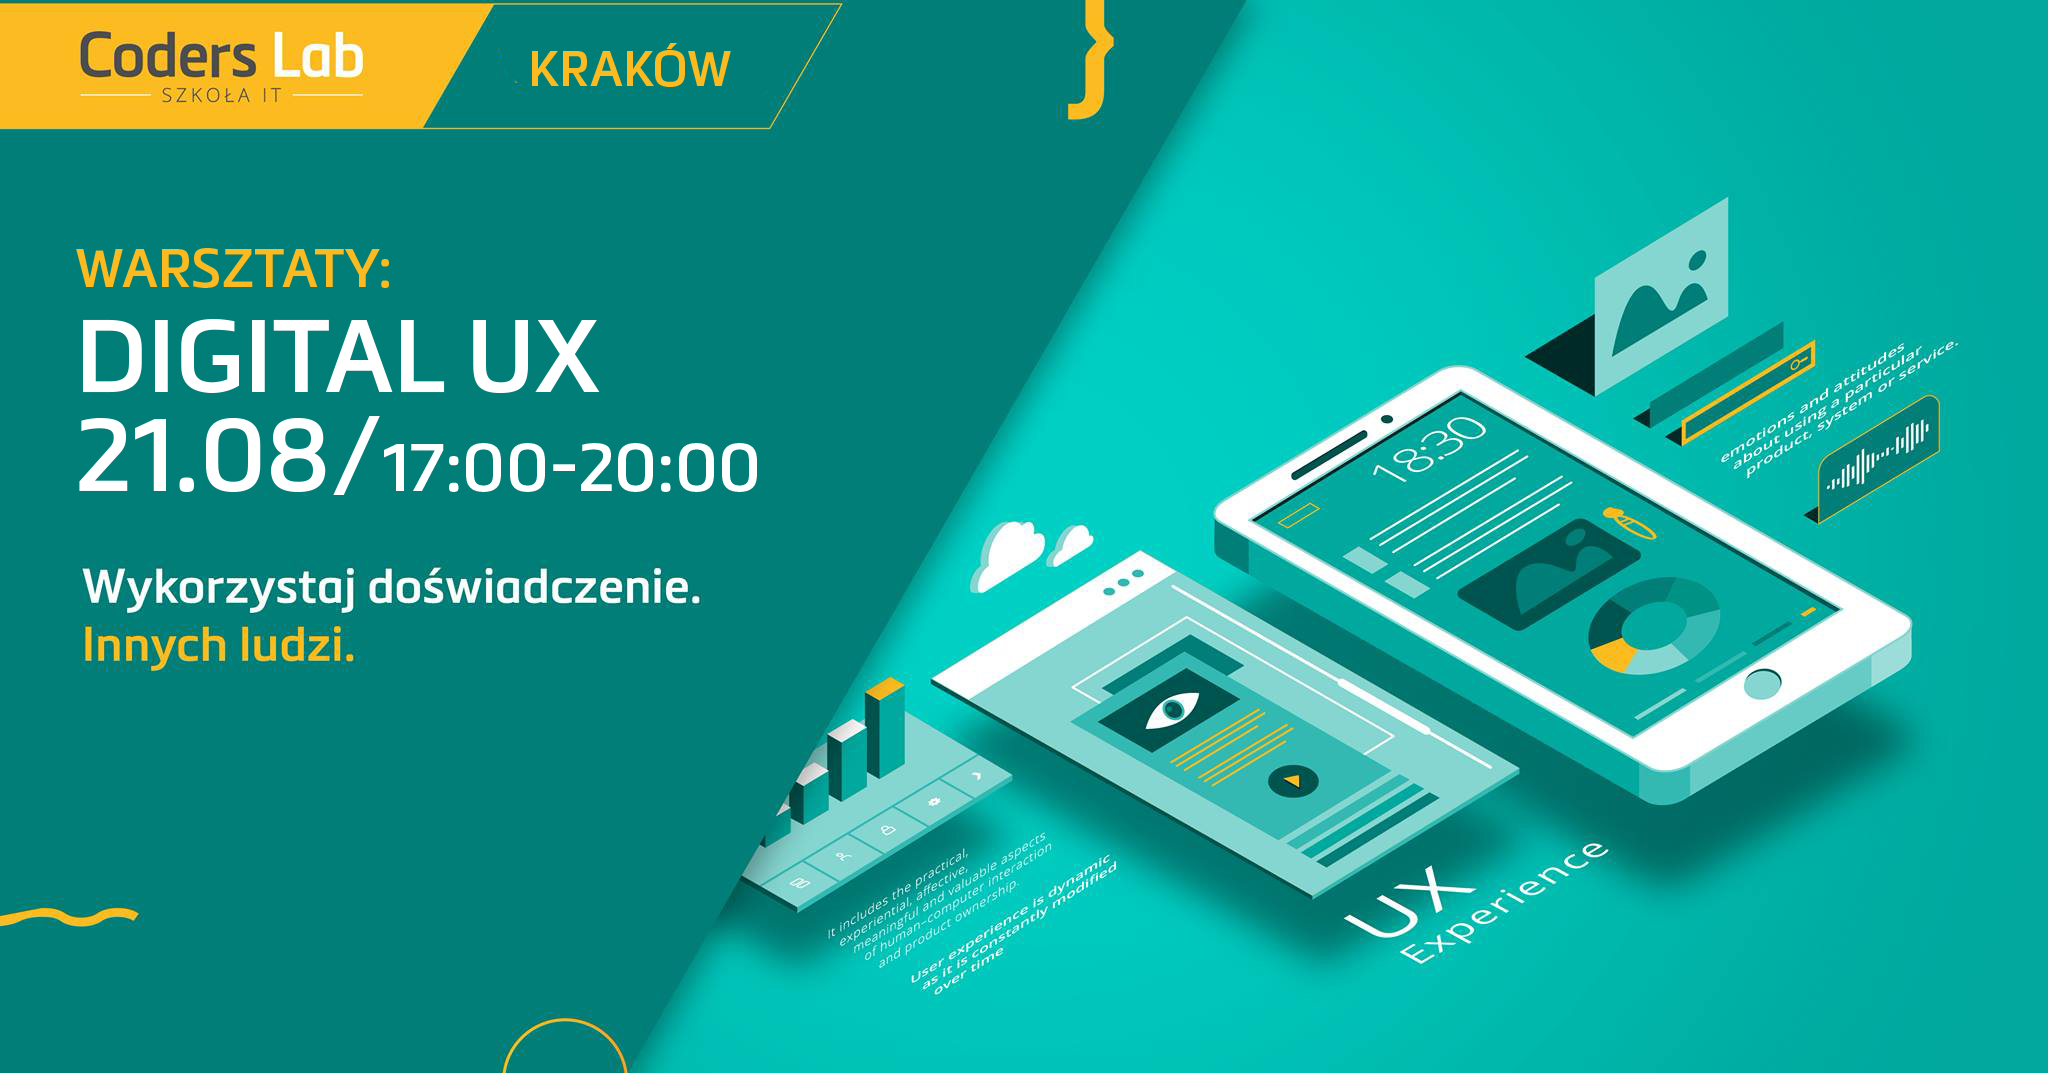 coders-lab-szkola-it-warsztaty-digital-ux-w-krakowie-sierpien-2018